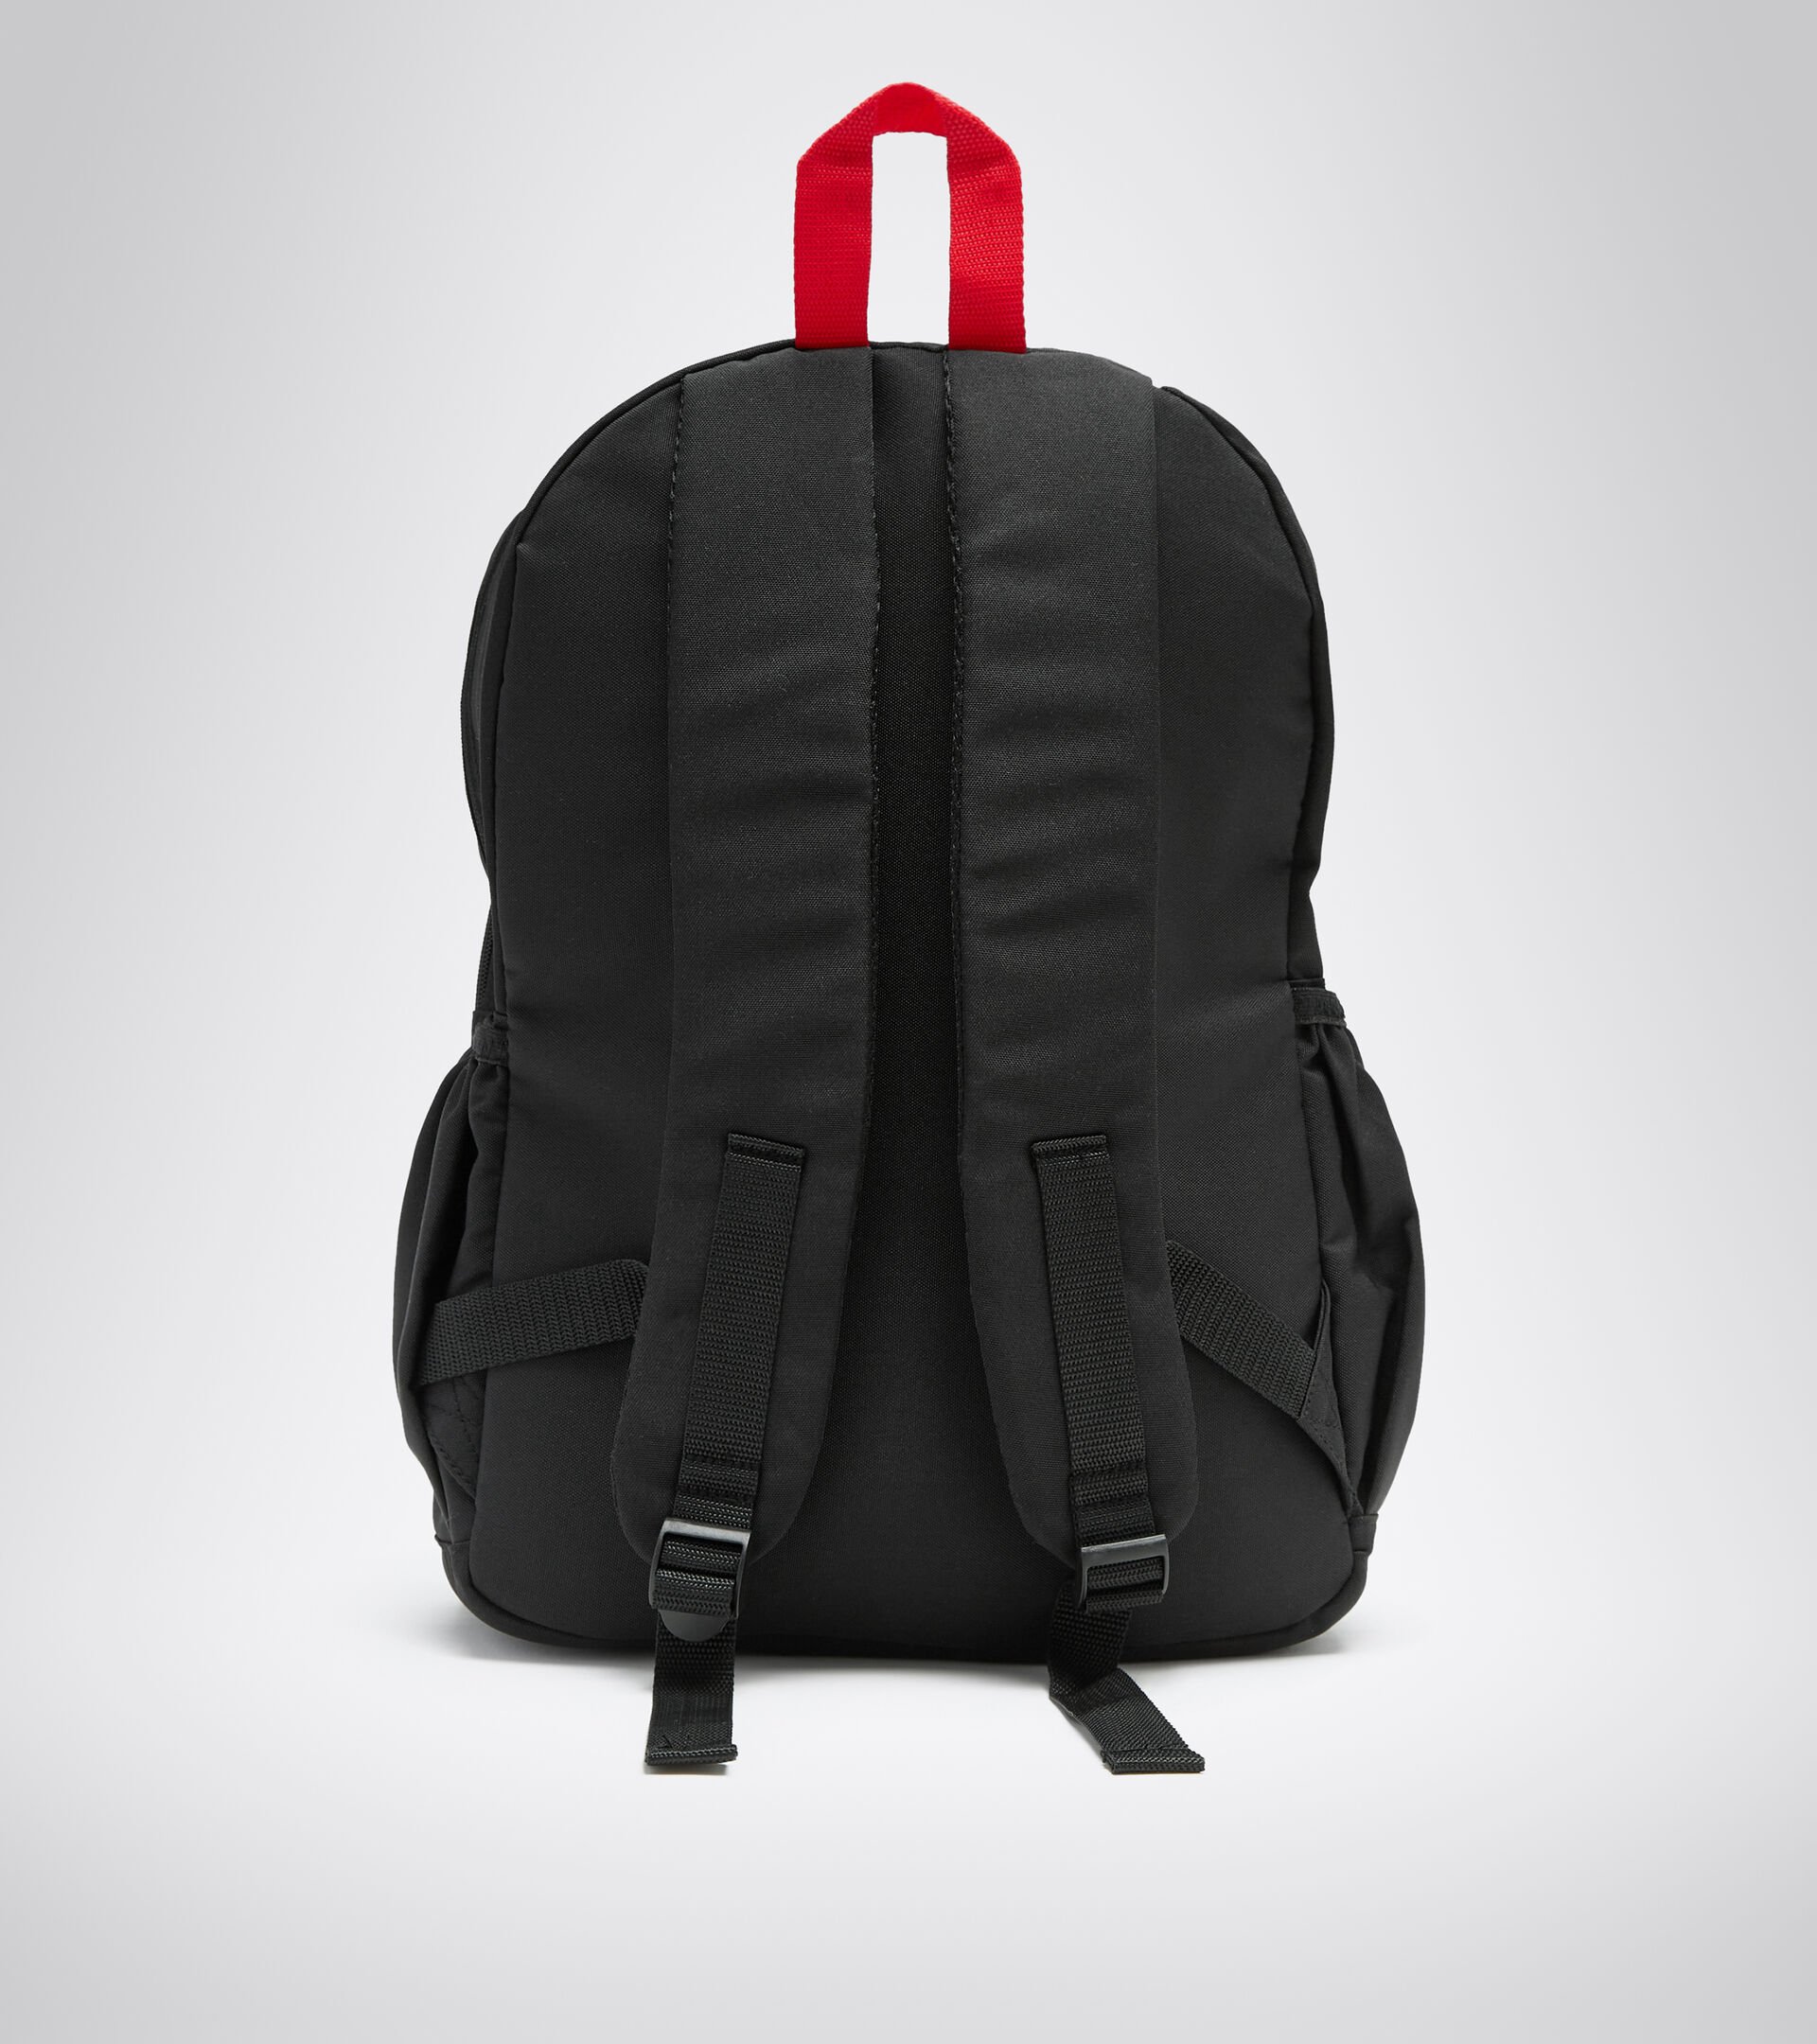 Tennis backpack BACKPACK TENNIS BLACK - Diadora